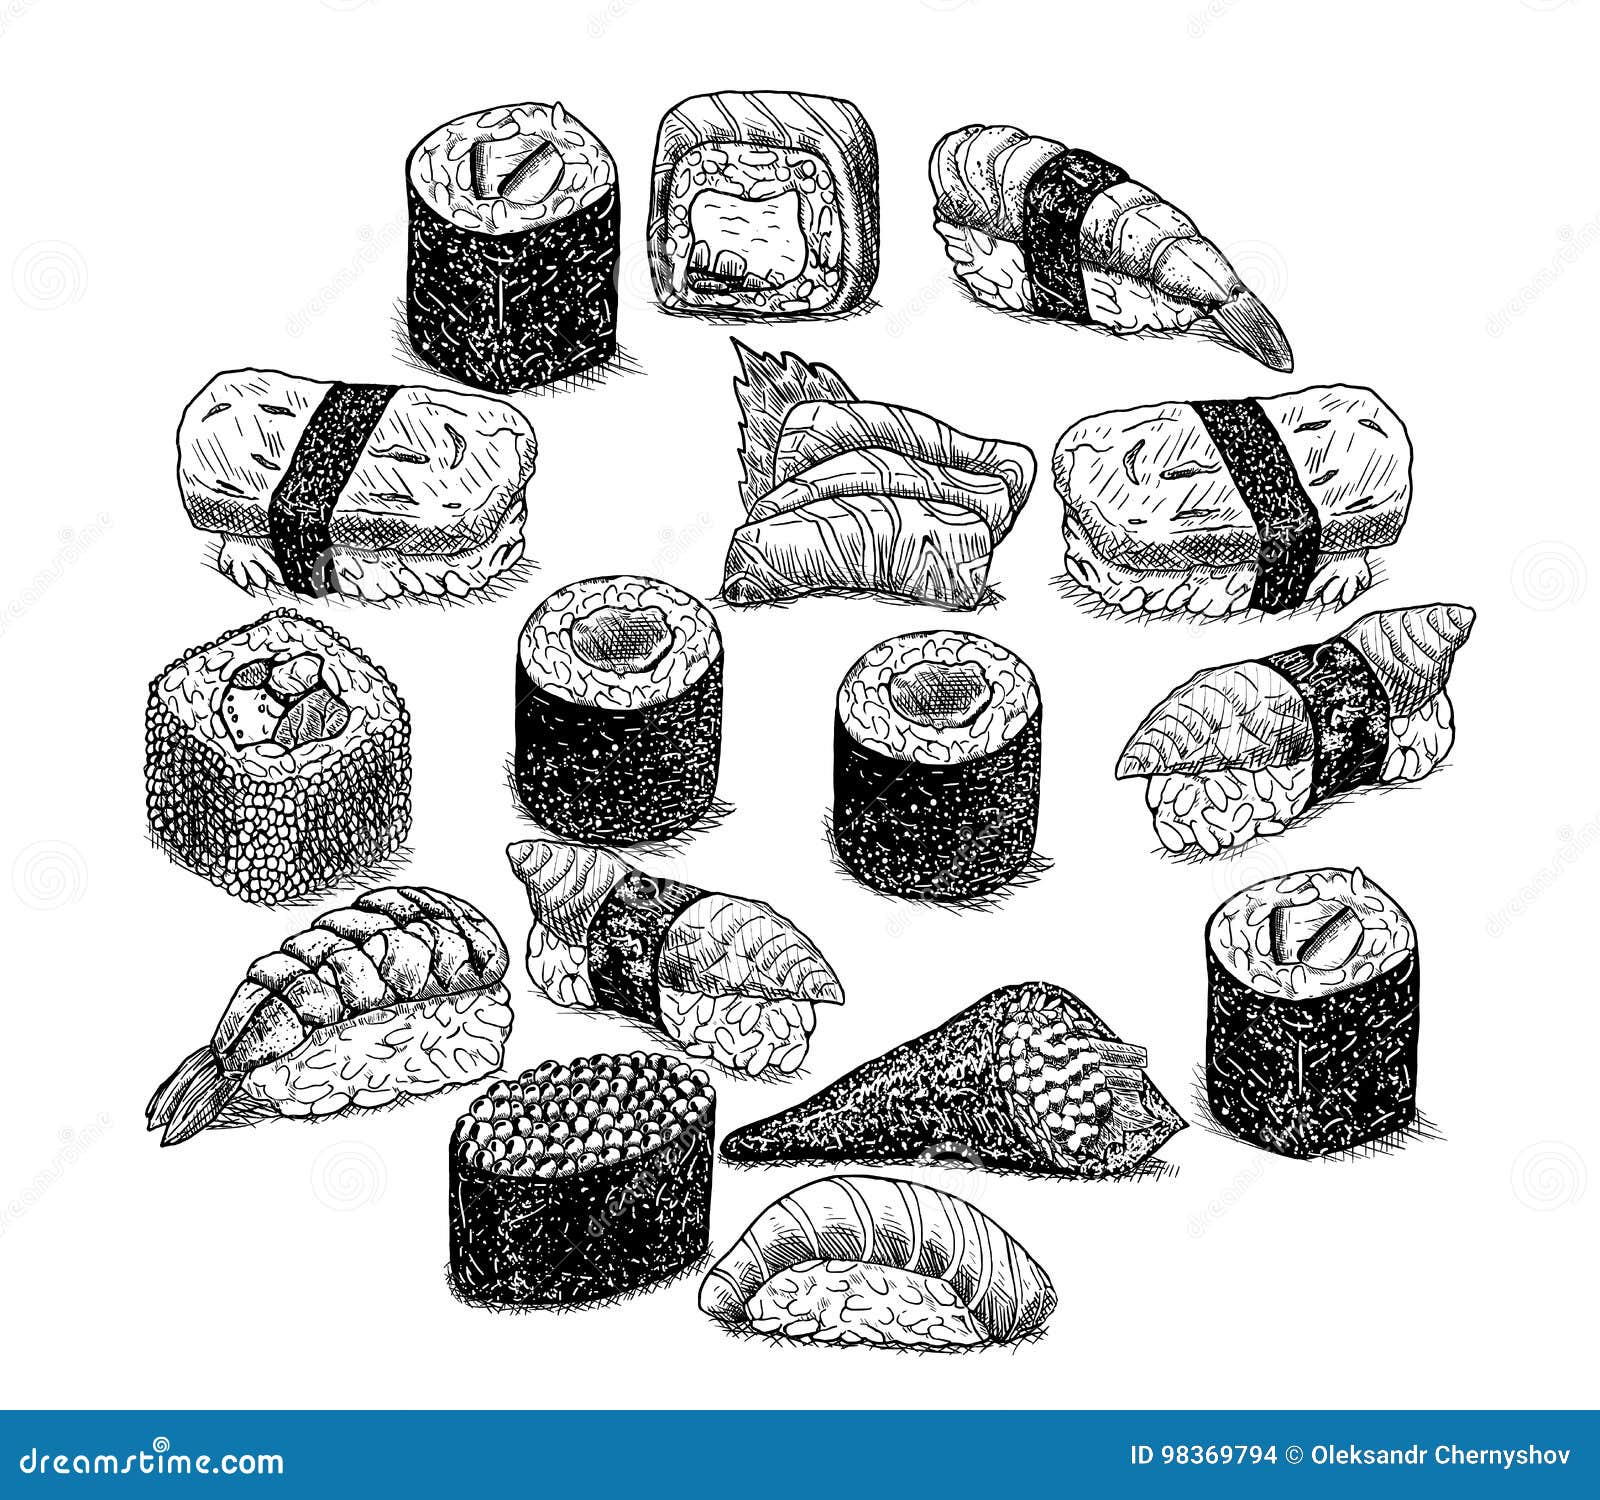 Sushi And Rolls Of Hand-drawn Illustration. Stock Illustration ...